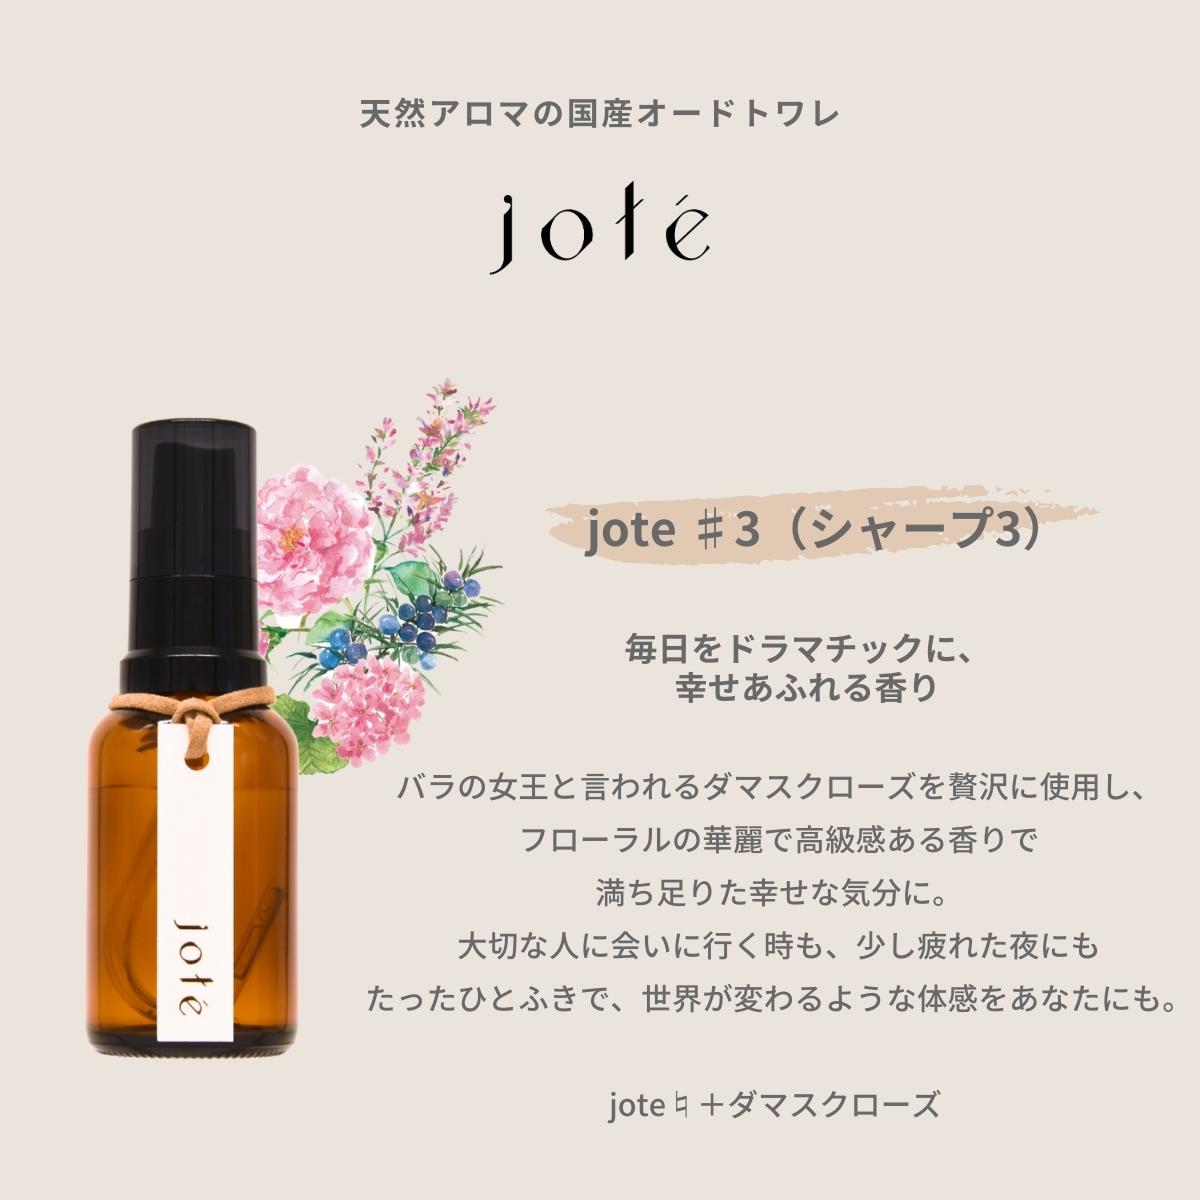 【 Sweet set 】Perfume 可憐な香りお試し5ml 3本セット